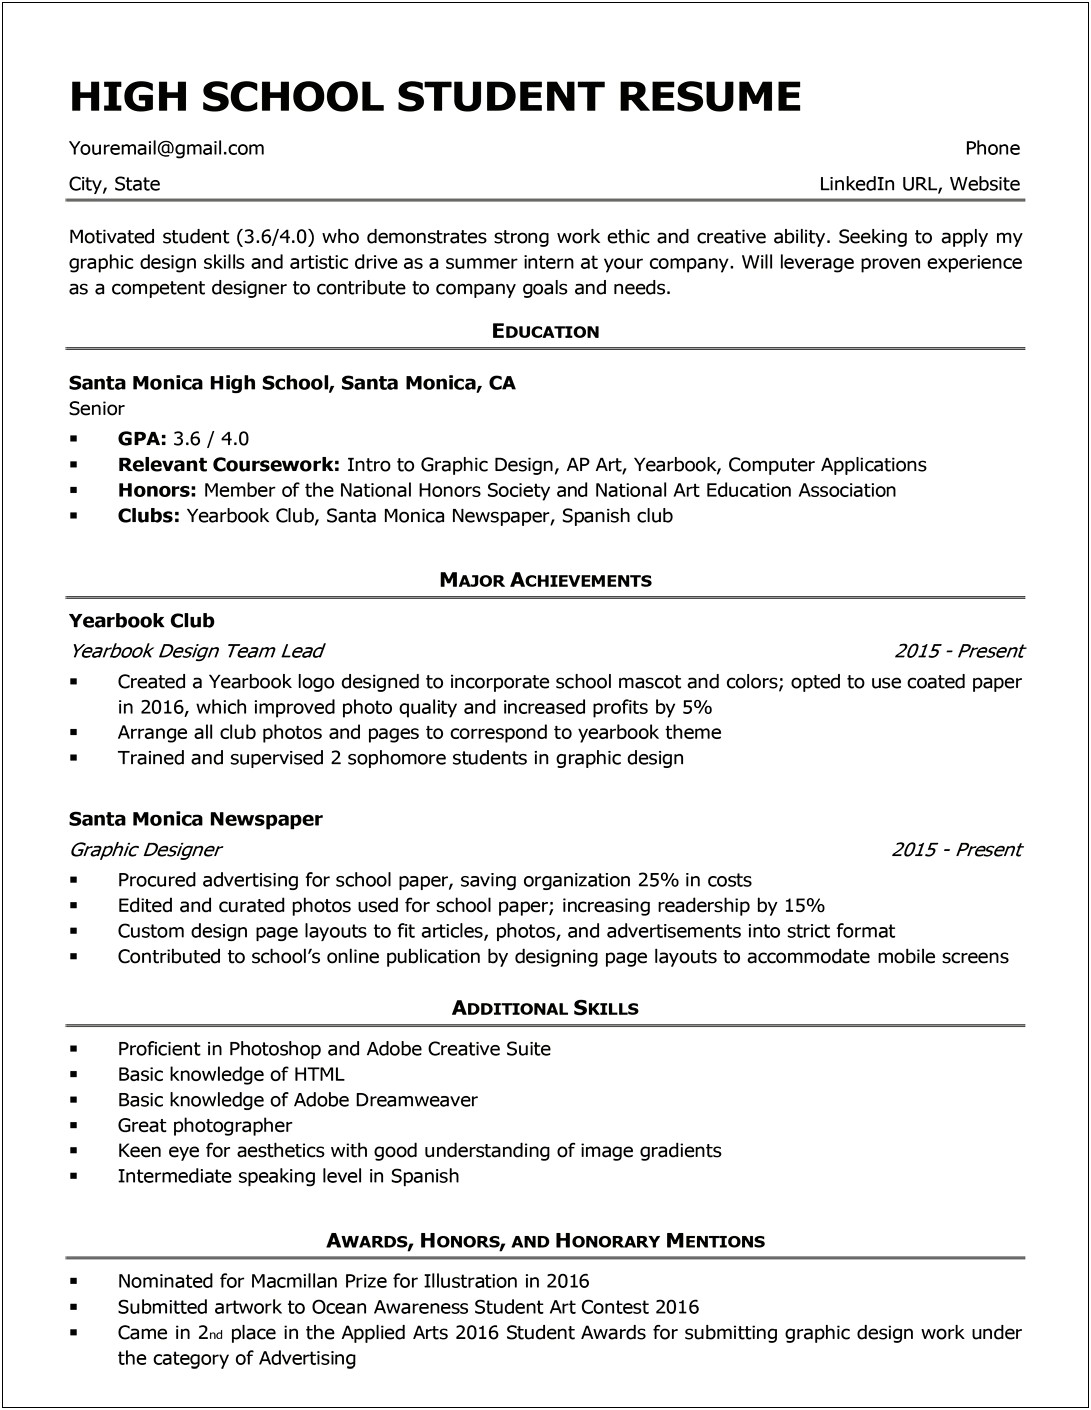 Resume Additional Skills And Accomplishments Example